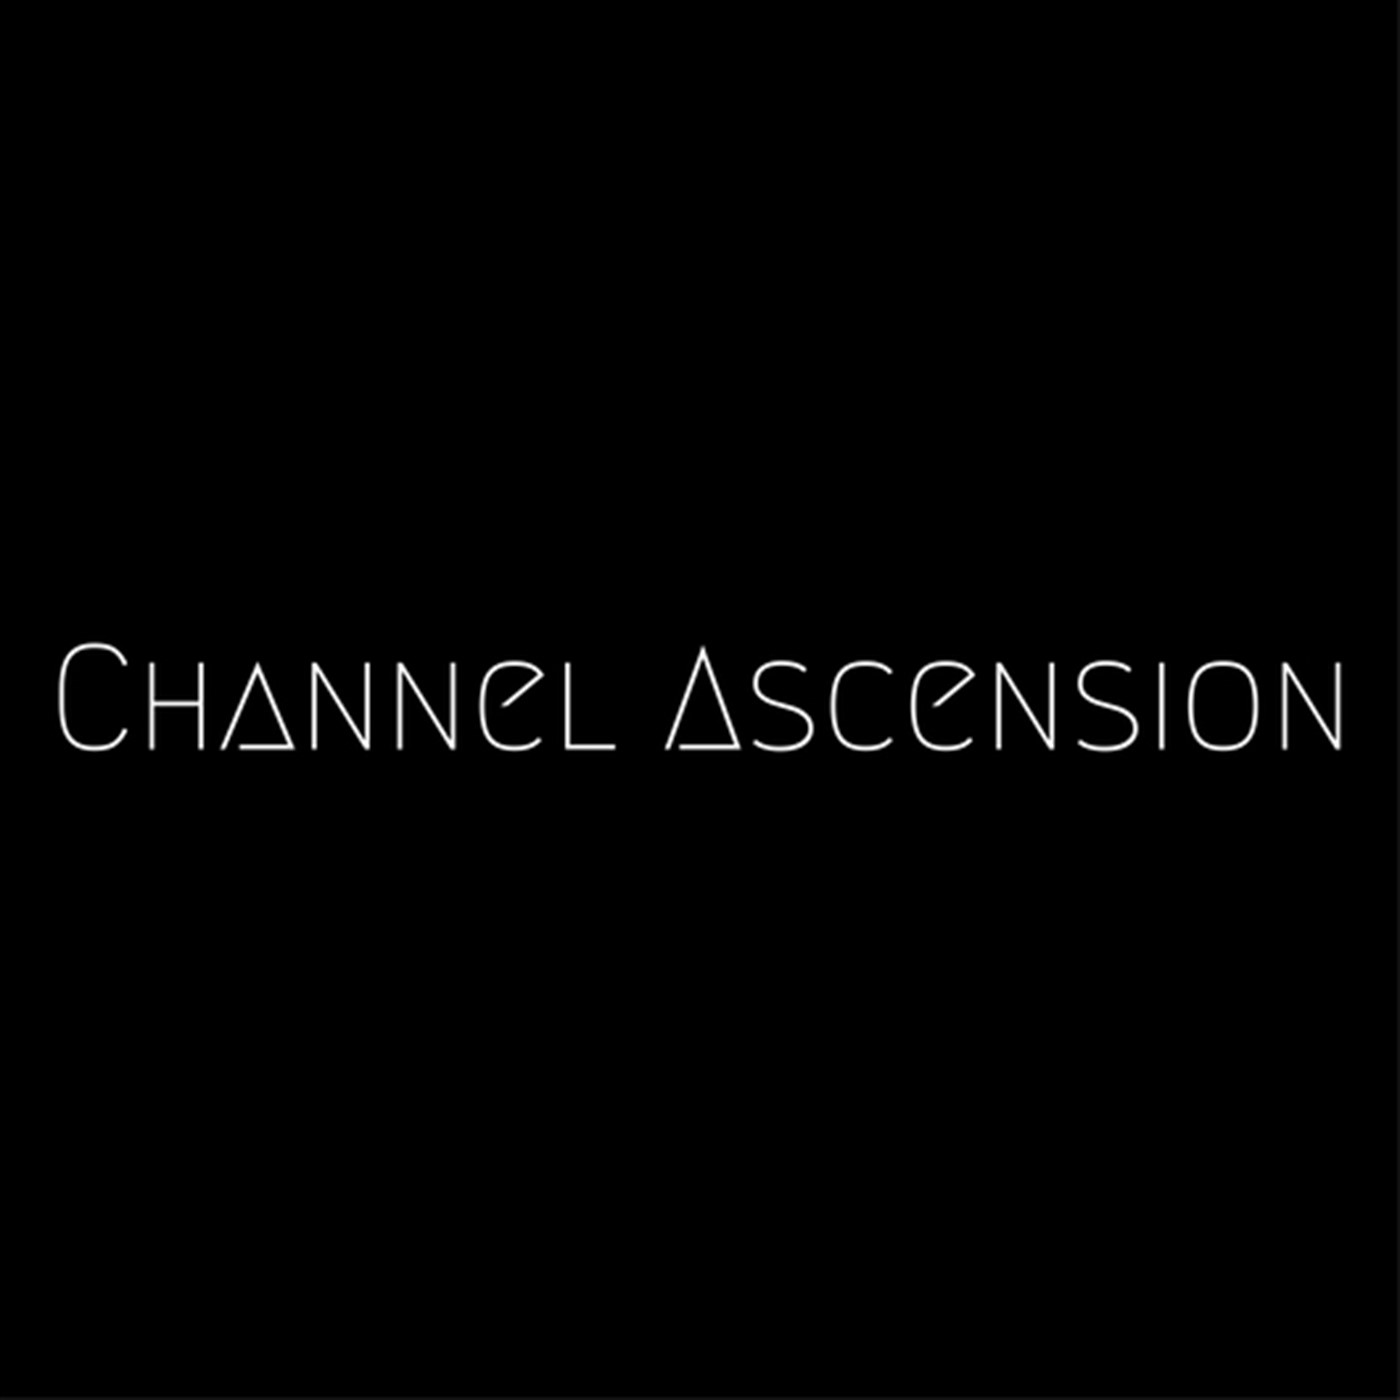 Channel Ascension